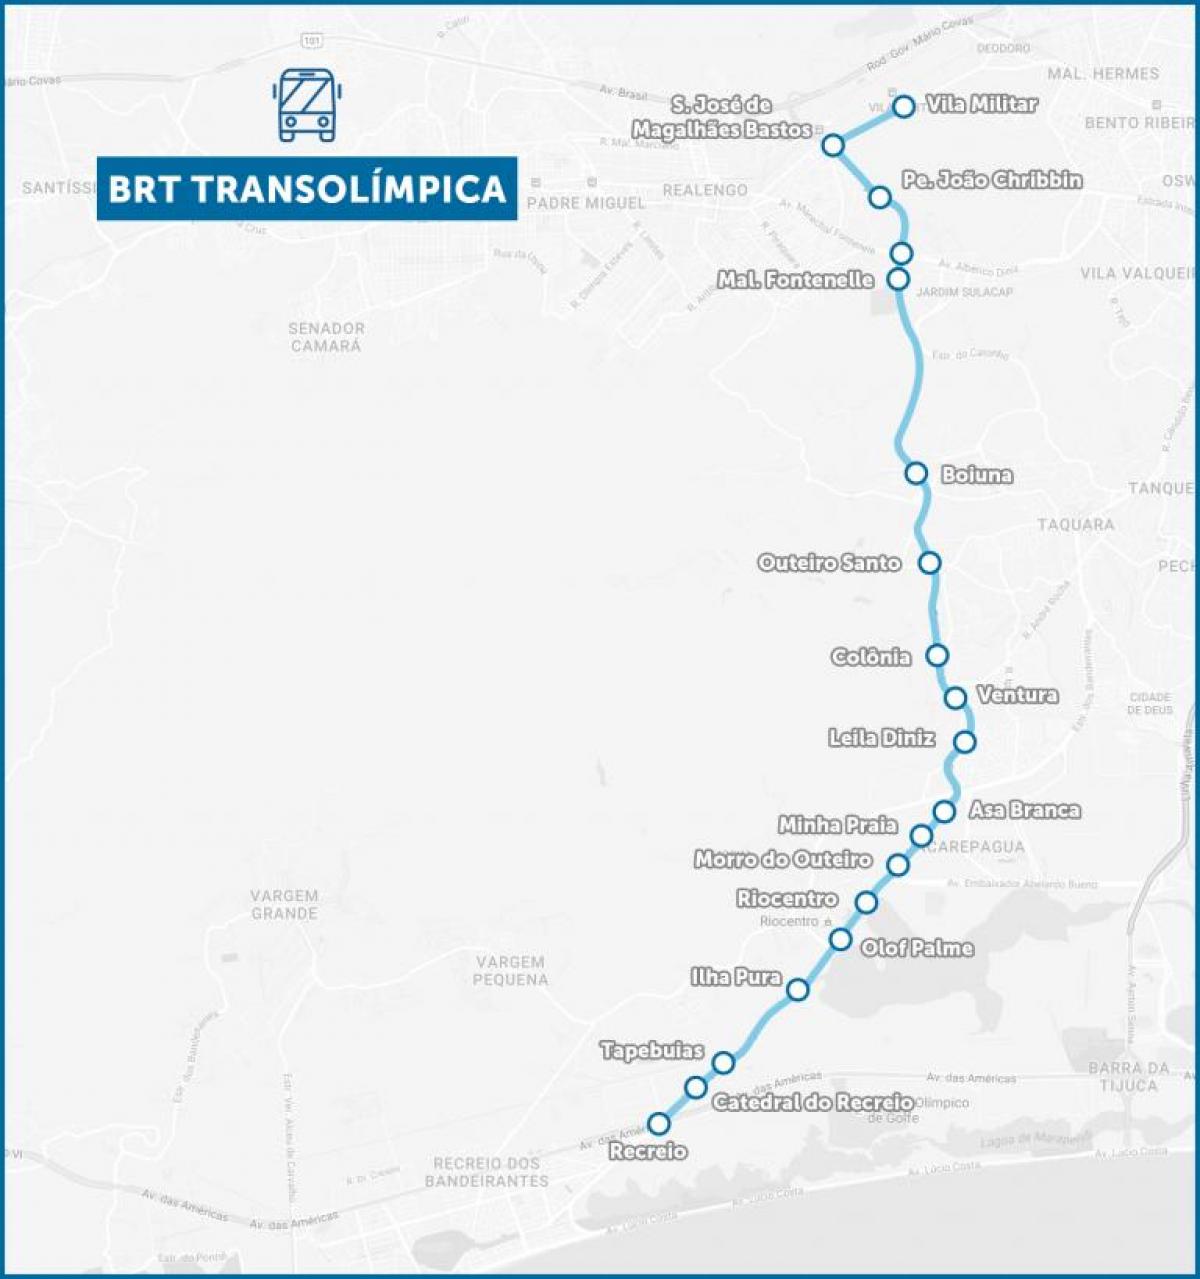 Kart over BRT TransOlimpica